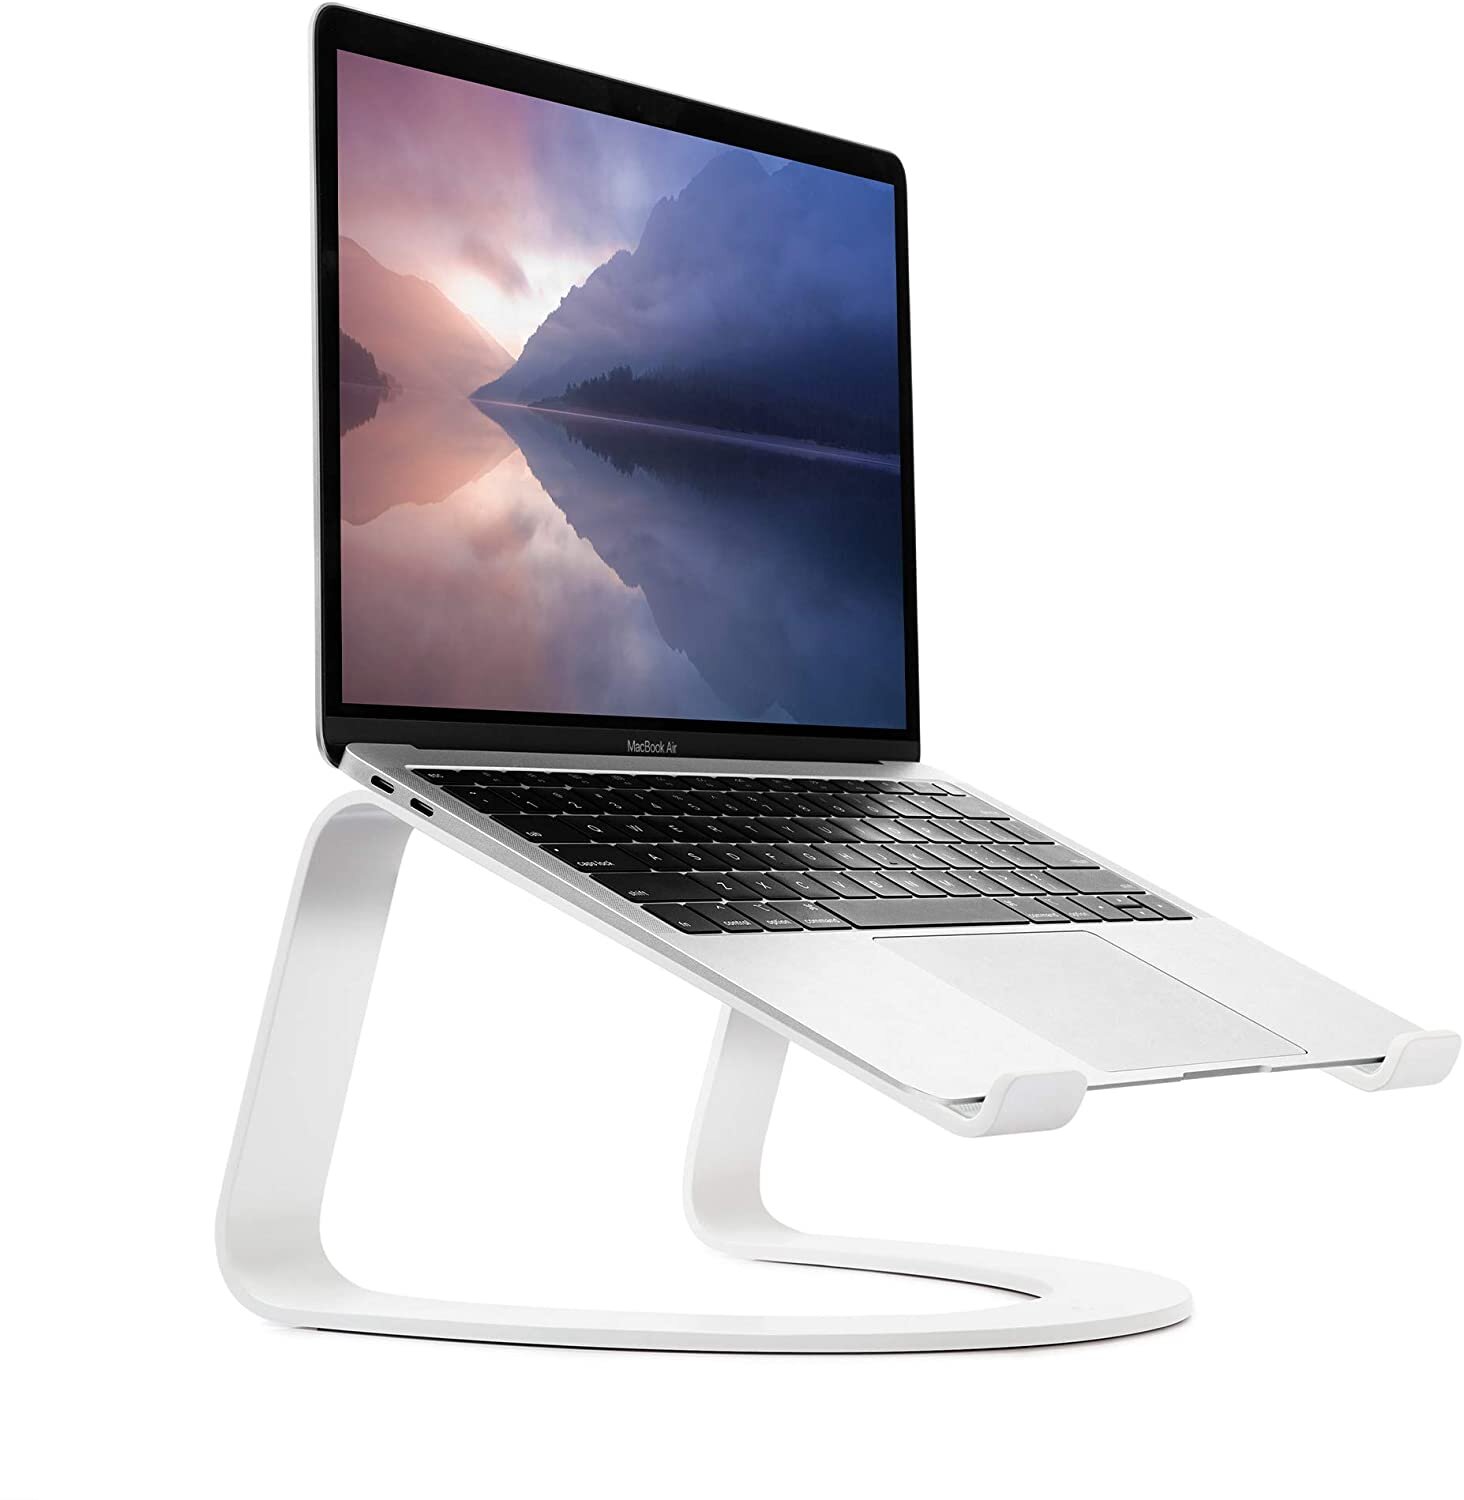  Twelve South Curve for MacBooks and Laptops | Ergonomic desktop cooling stand